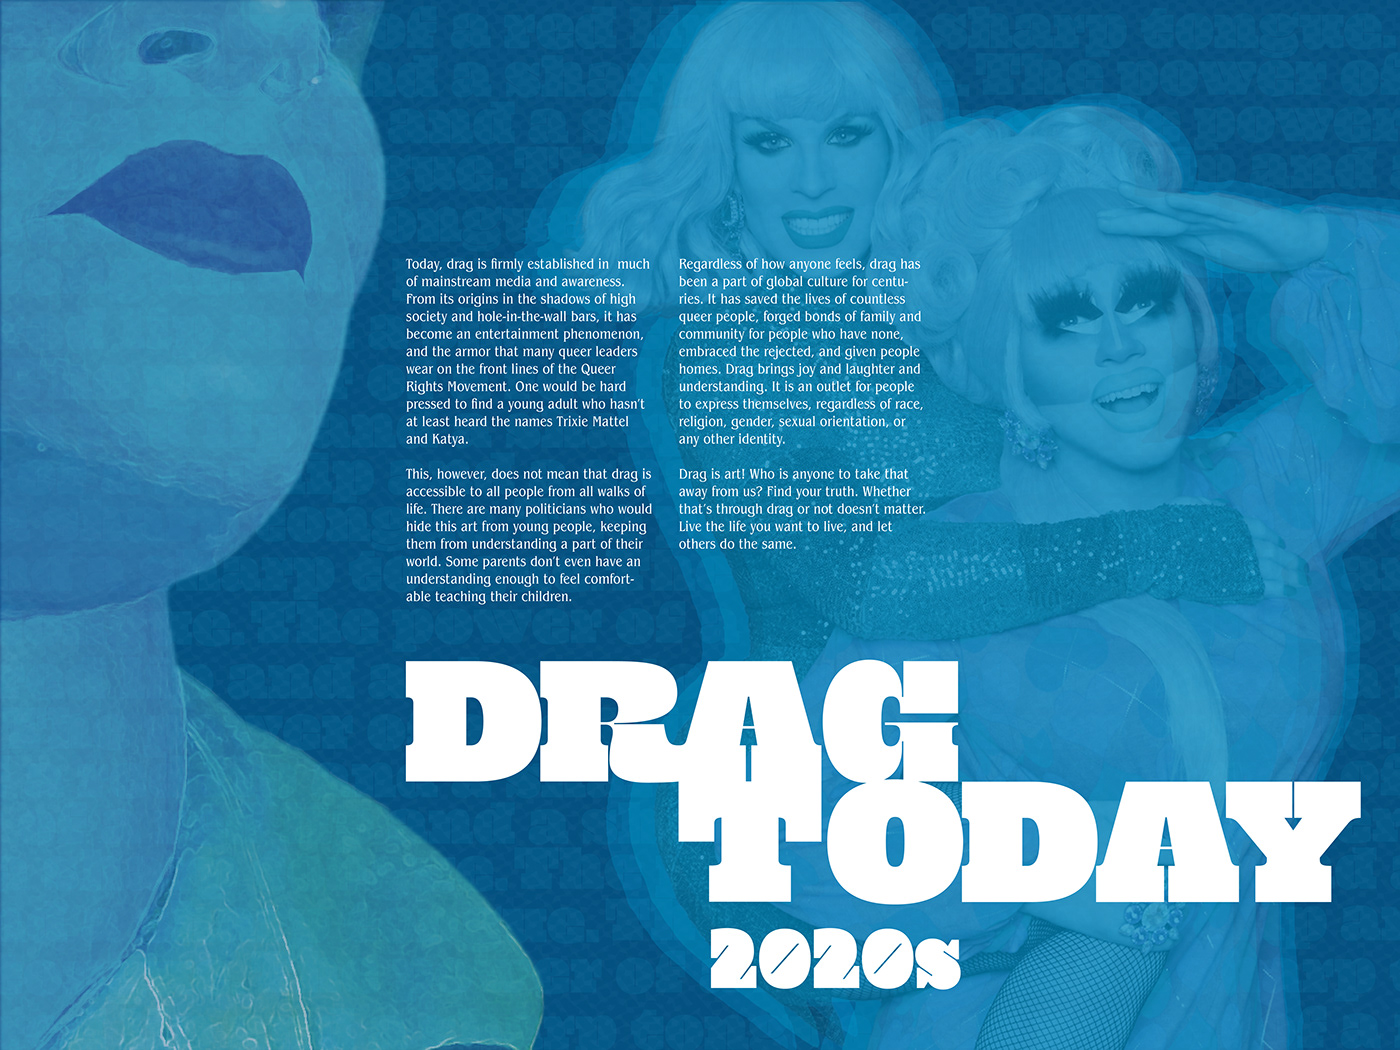 Drag drag queens history